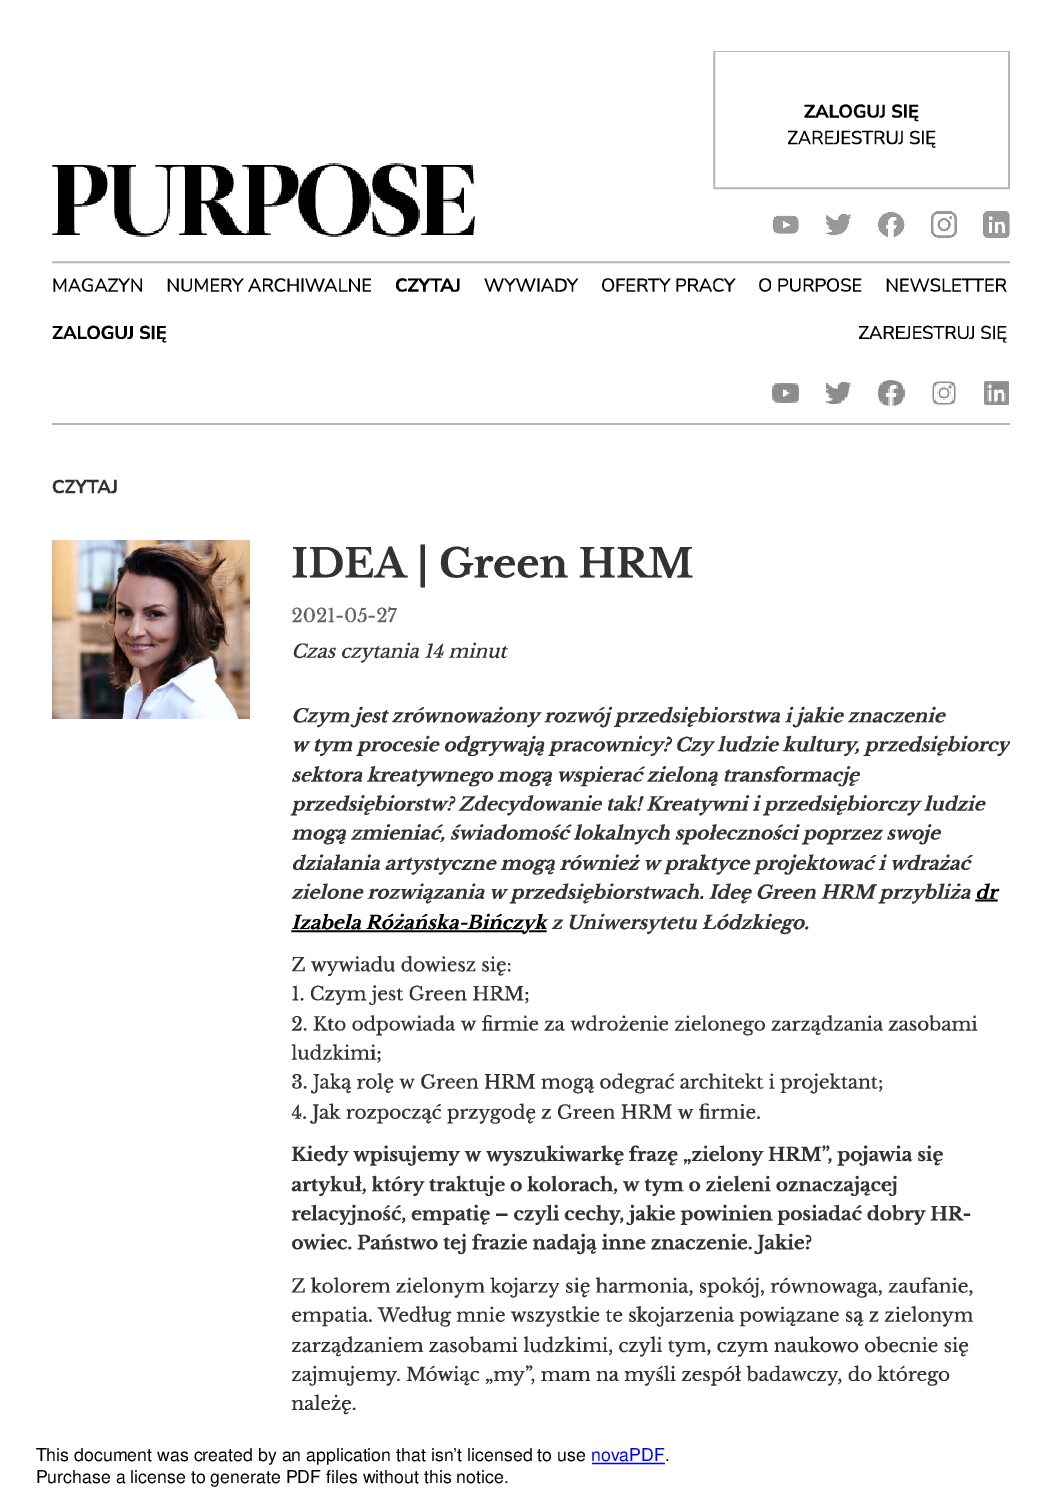 IDEA _ Green HRM - PURPOSE